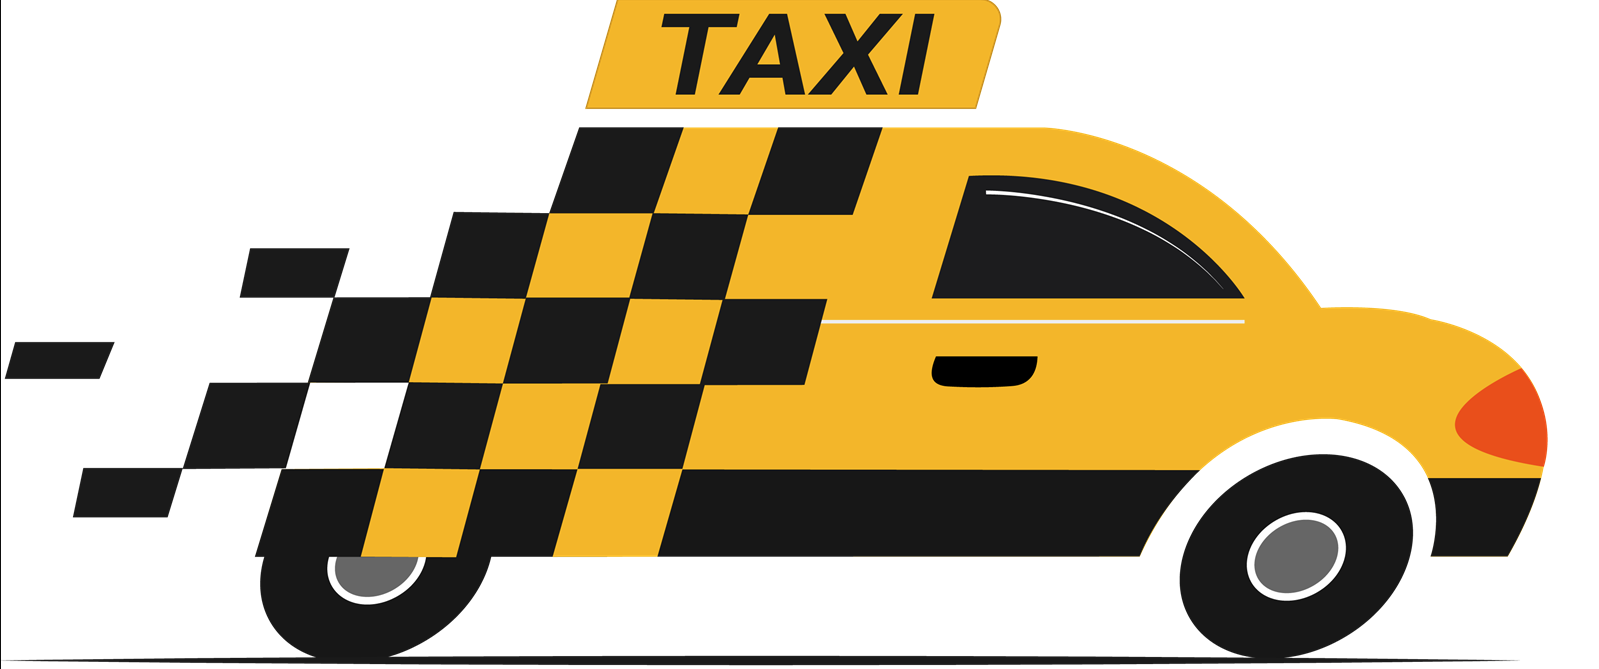 Taxi Giá Rẻ 790